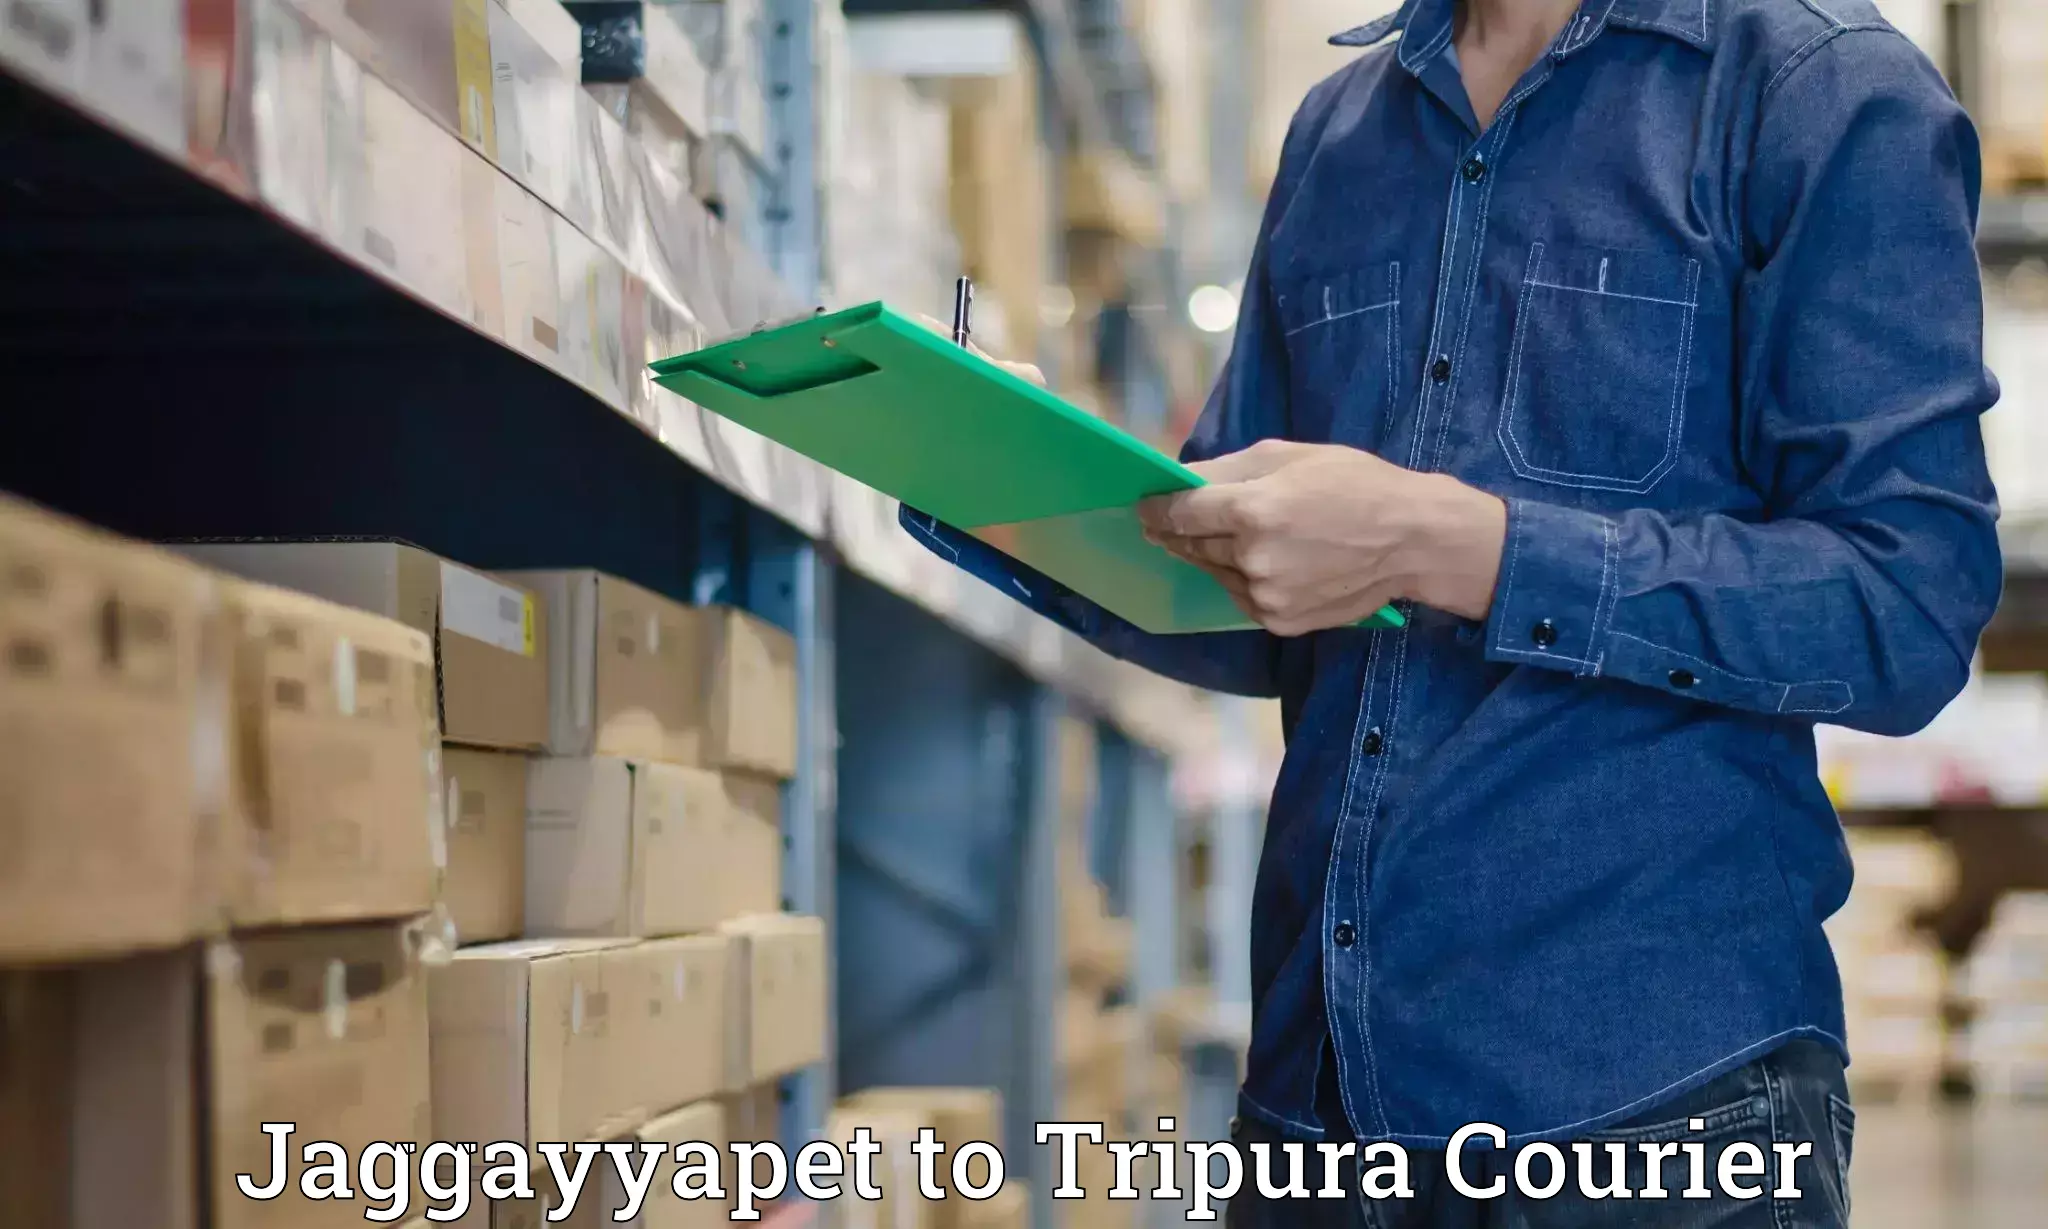 High-priority parcel service Jaggayyapet to Tripura